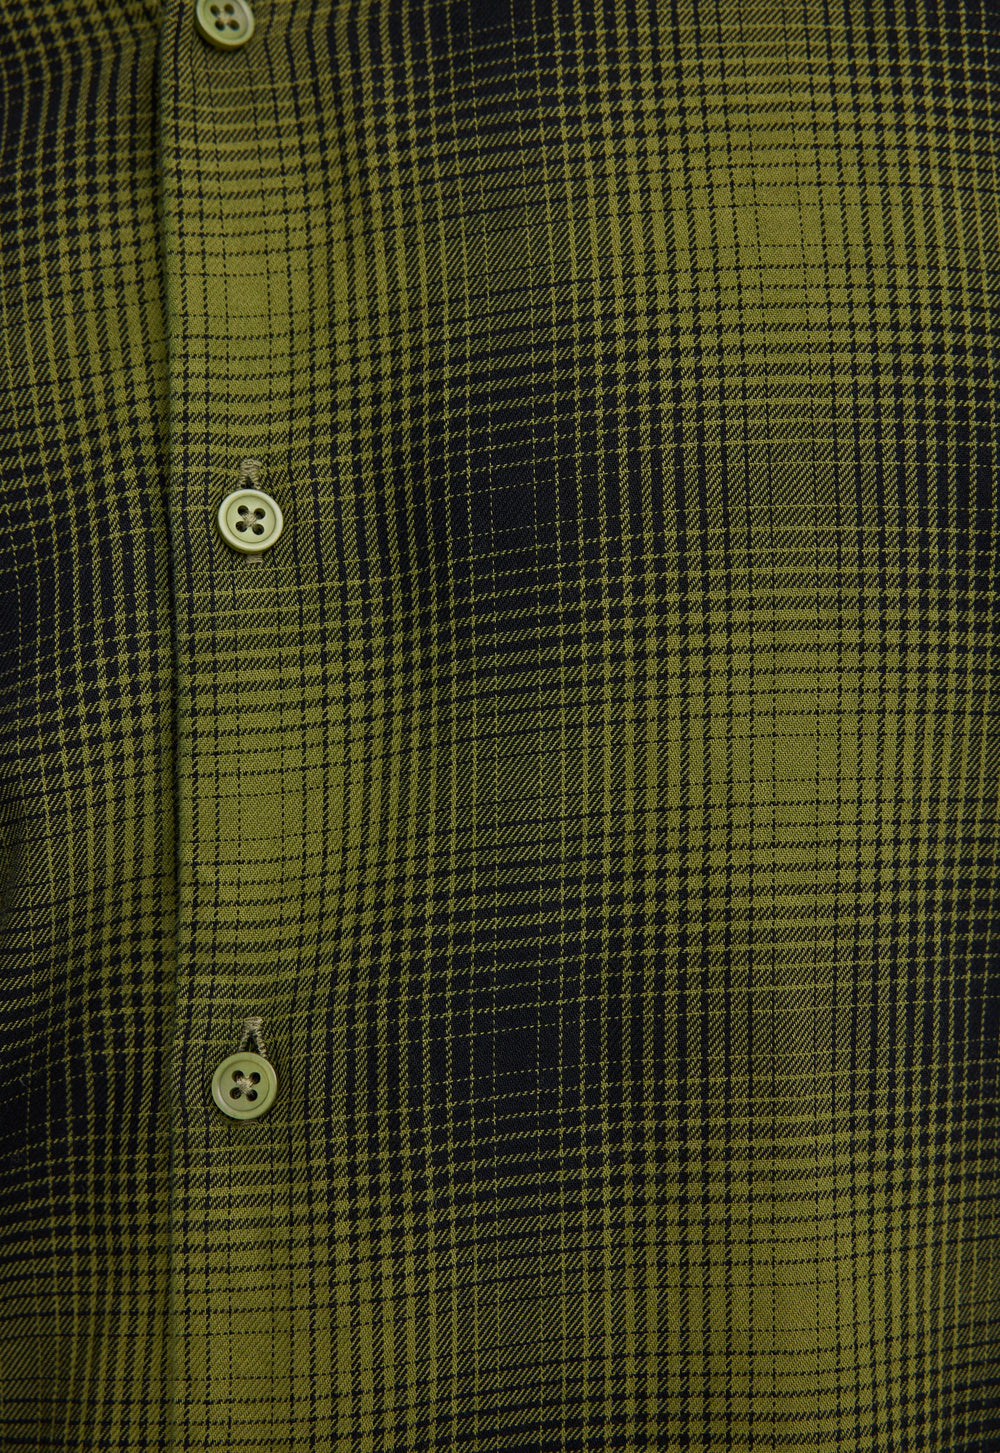 Jac+Jack Omar Cotton Shirt - Pine Needle Green Check